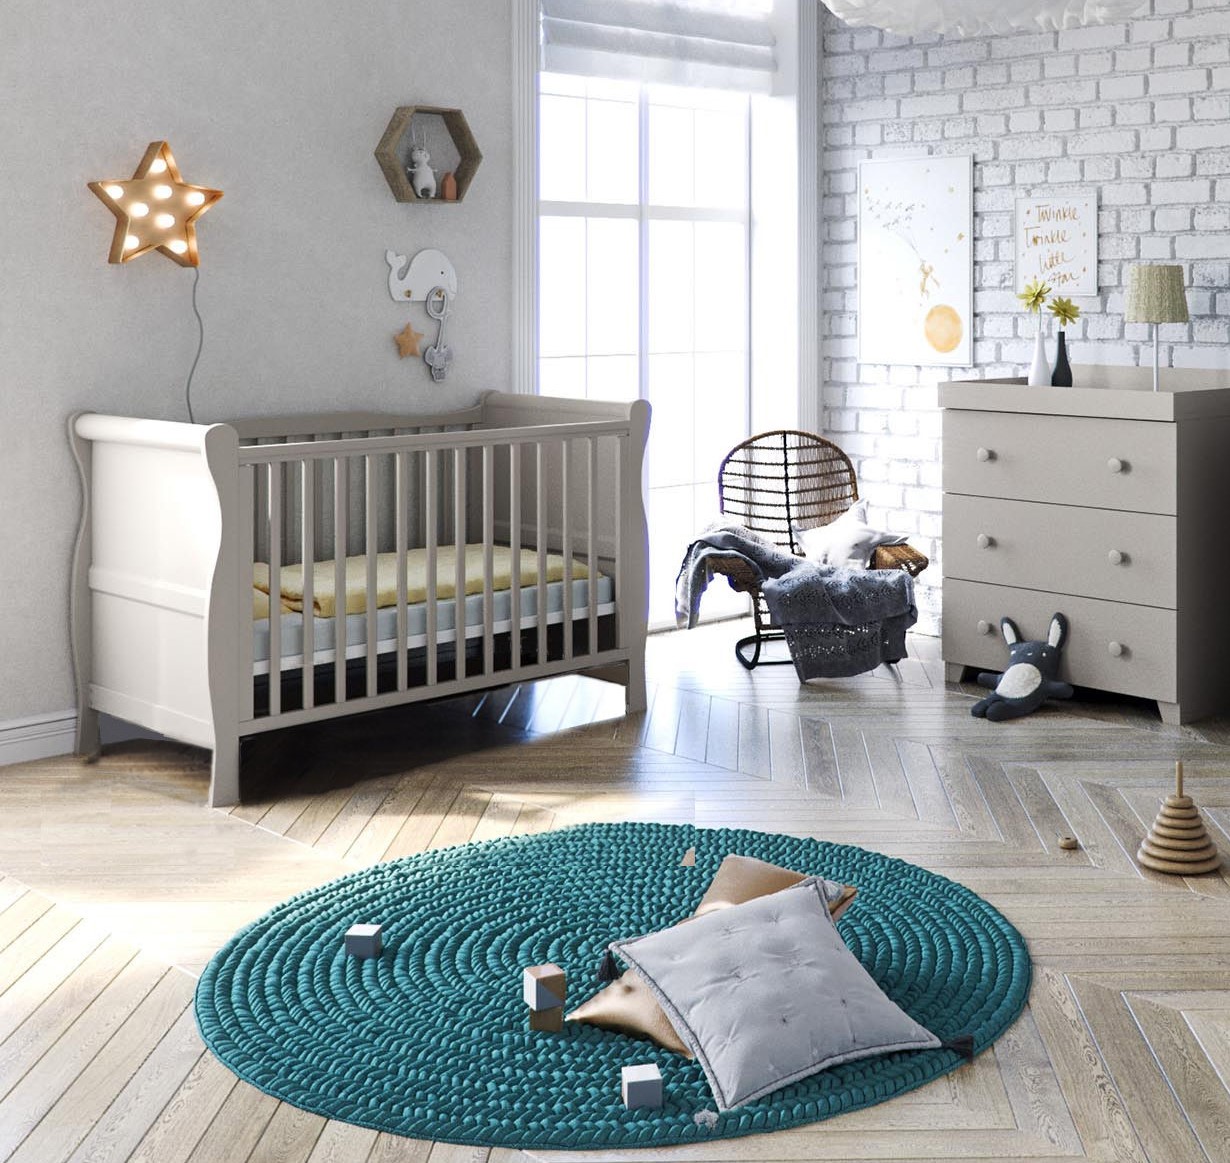 Little Acorns Sleigh 4 Piece Nursery Room Set - Cot Bed With Dresser - Grey